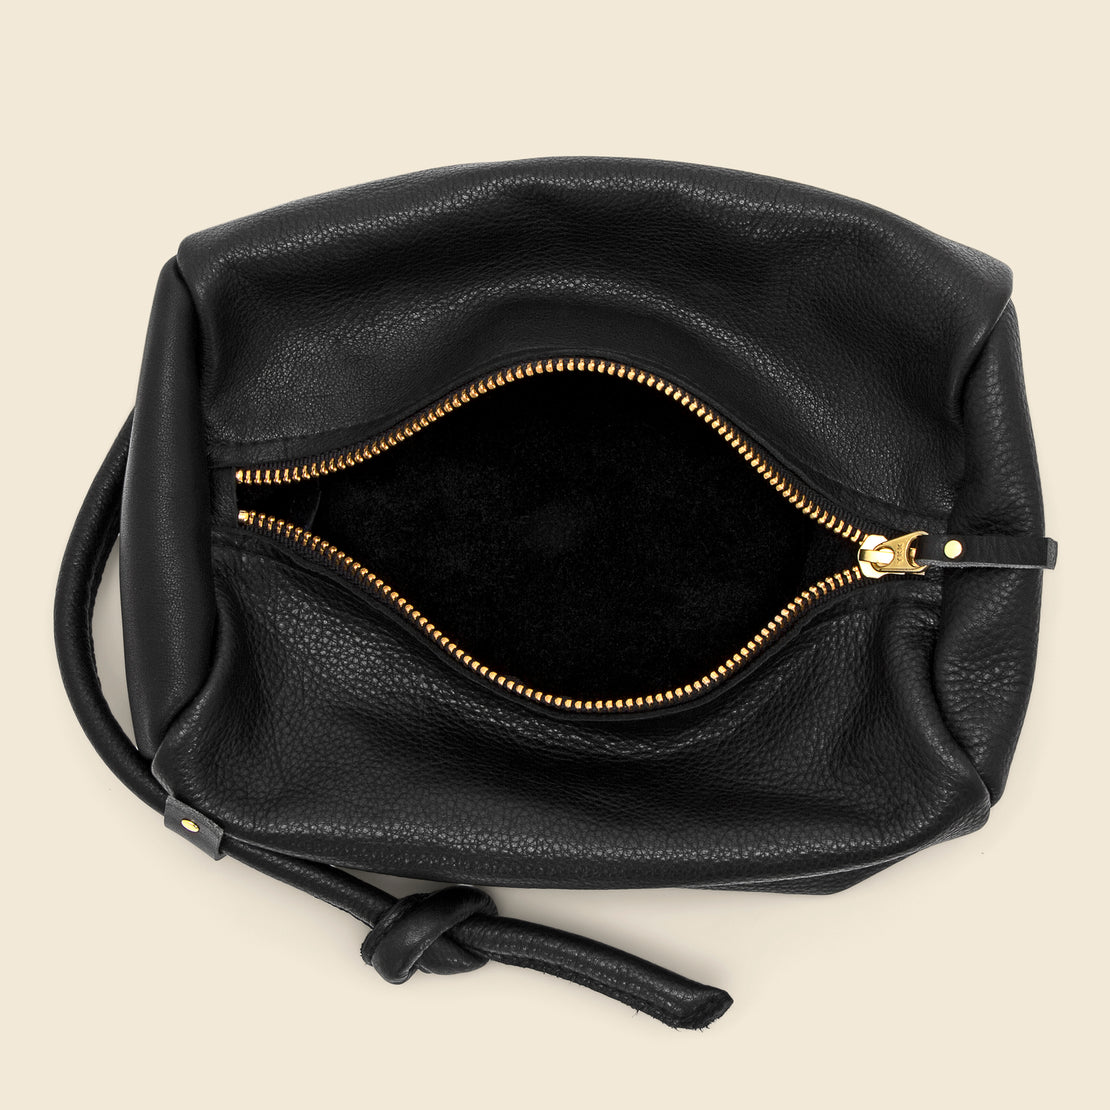 Barrel Zipper Pouch - Black - 8.6.4 Design - STAG Provisions - W - Accessories - Bag